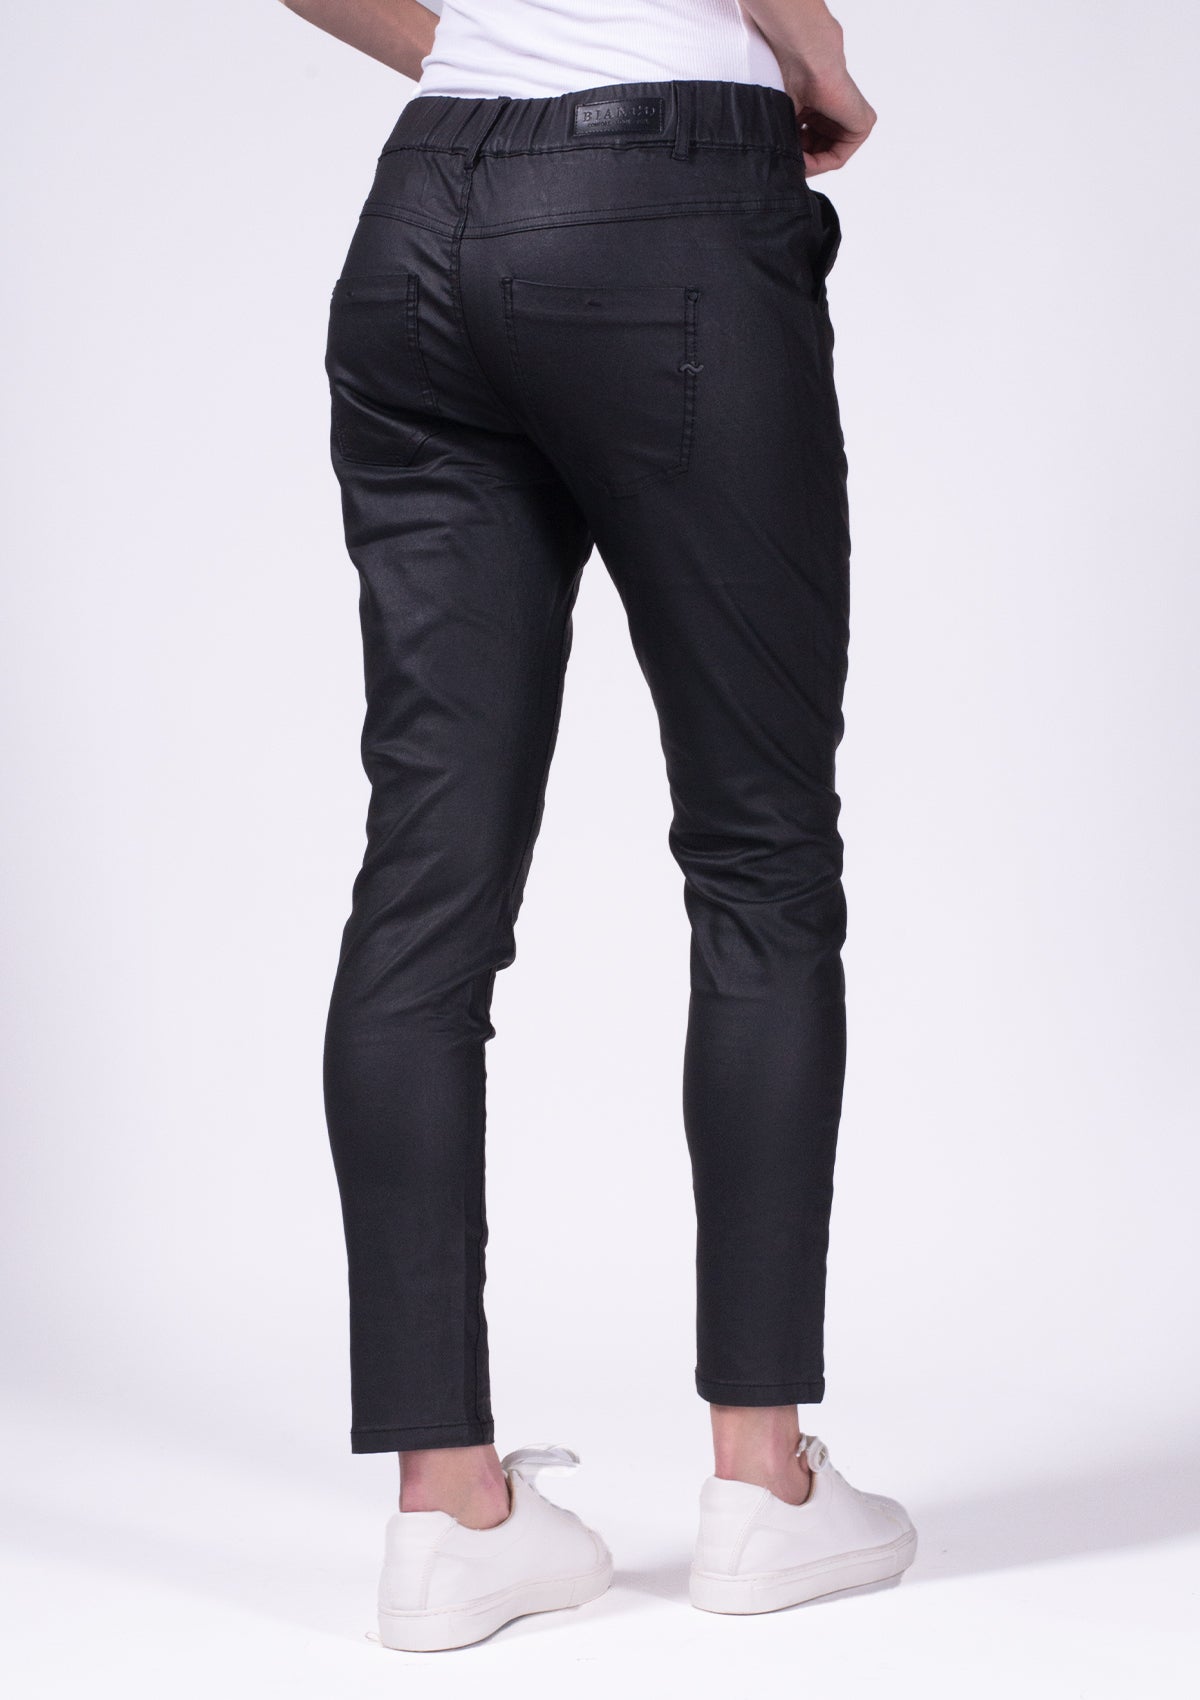 Jenna Black Pant - Bianco Jeans - Beechworth Emporium